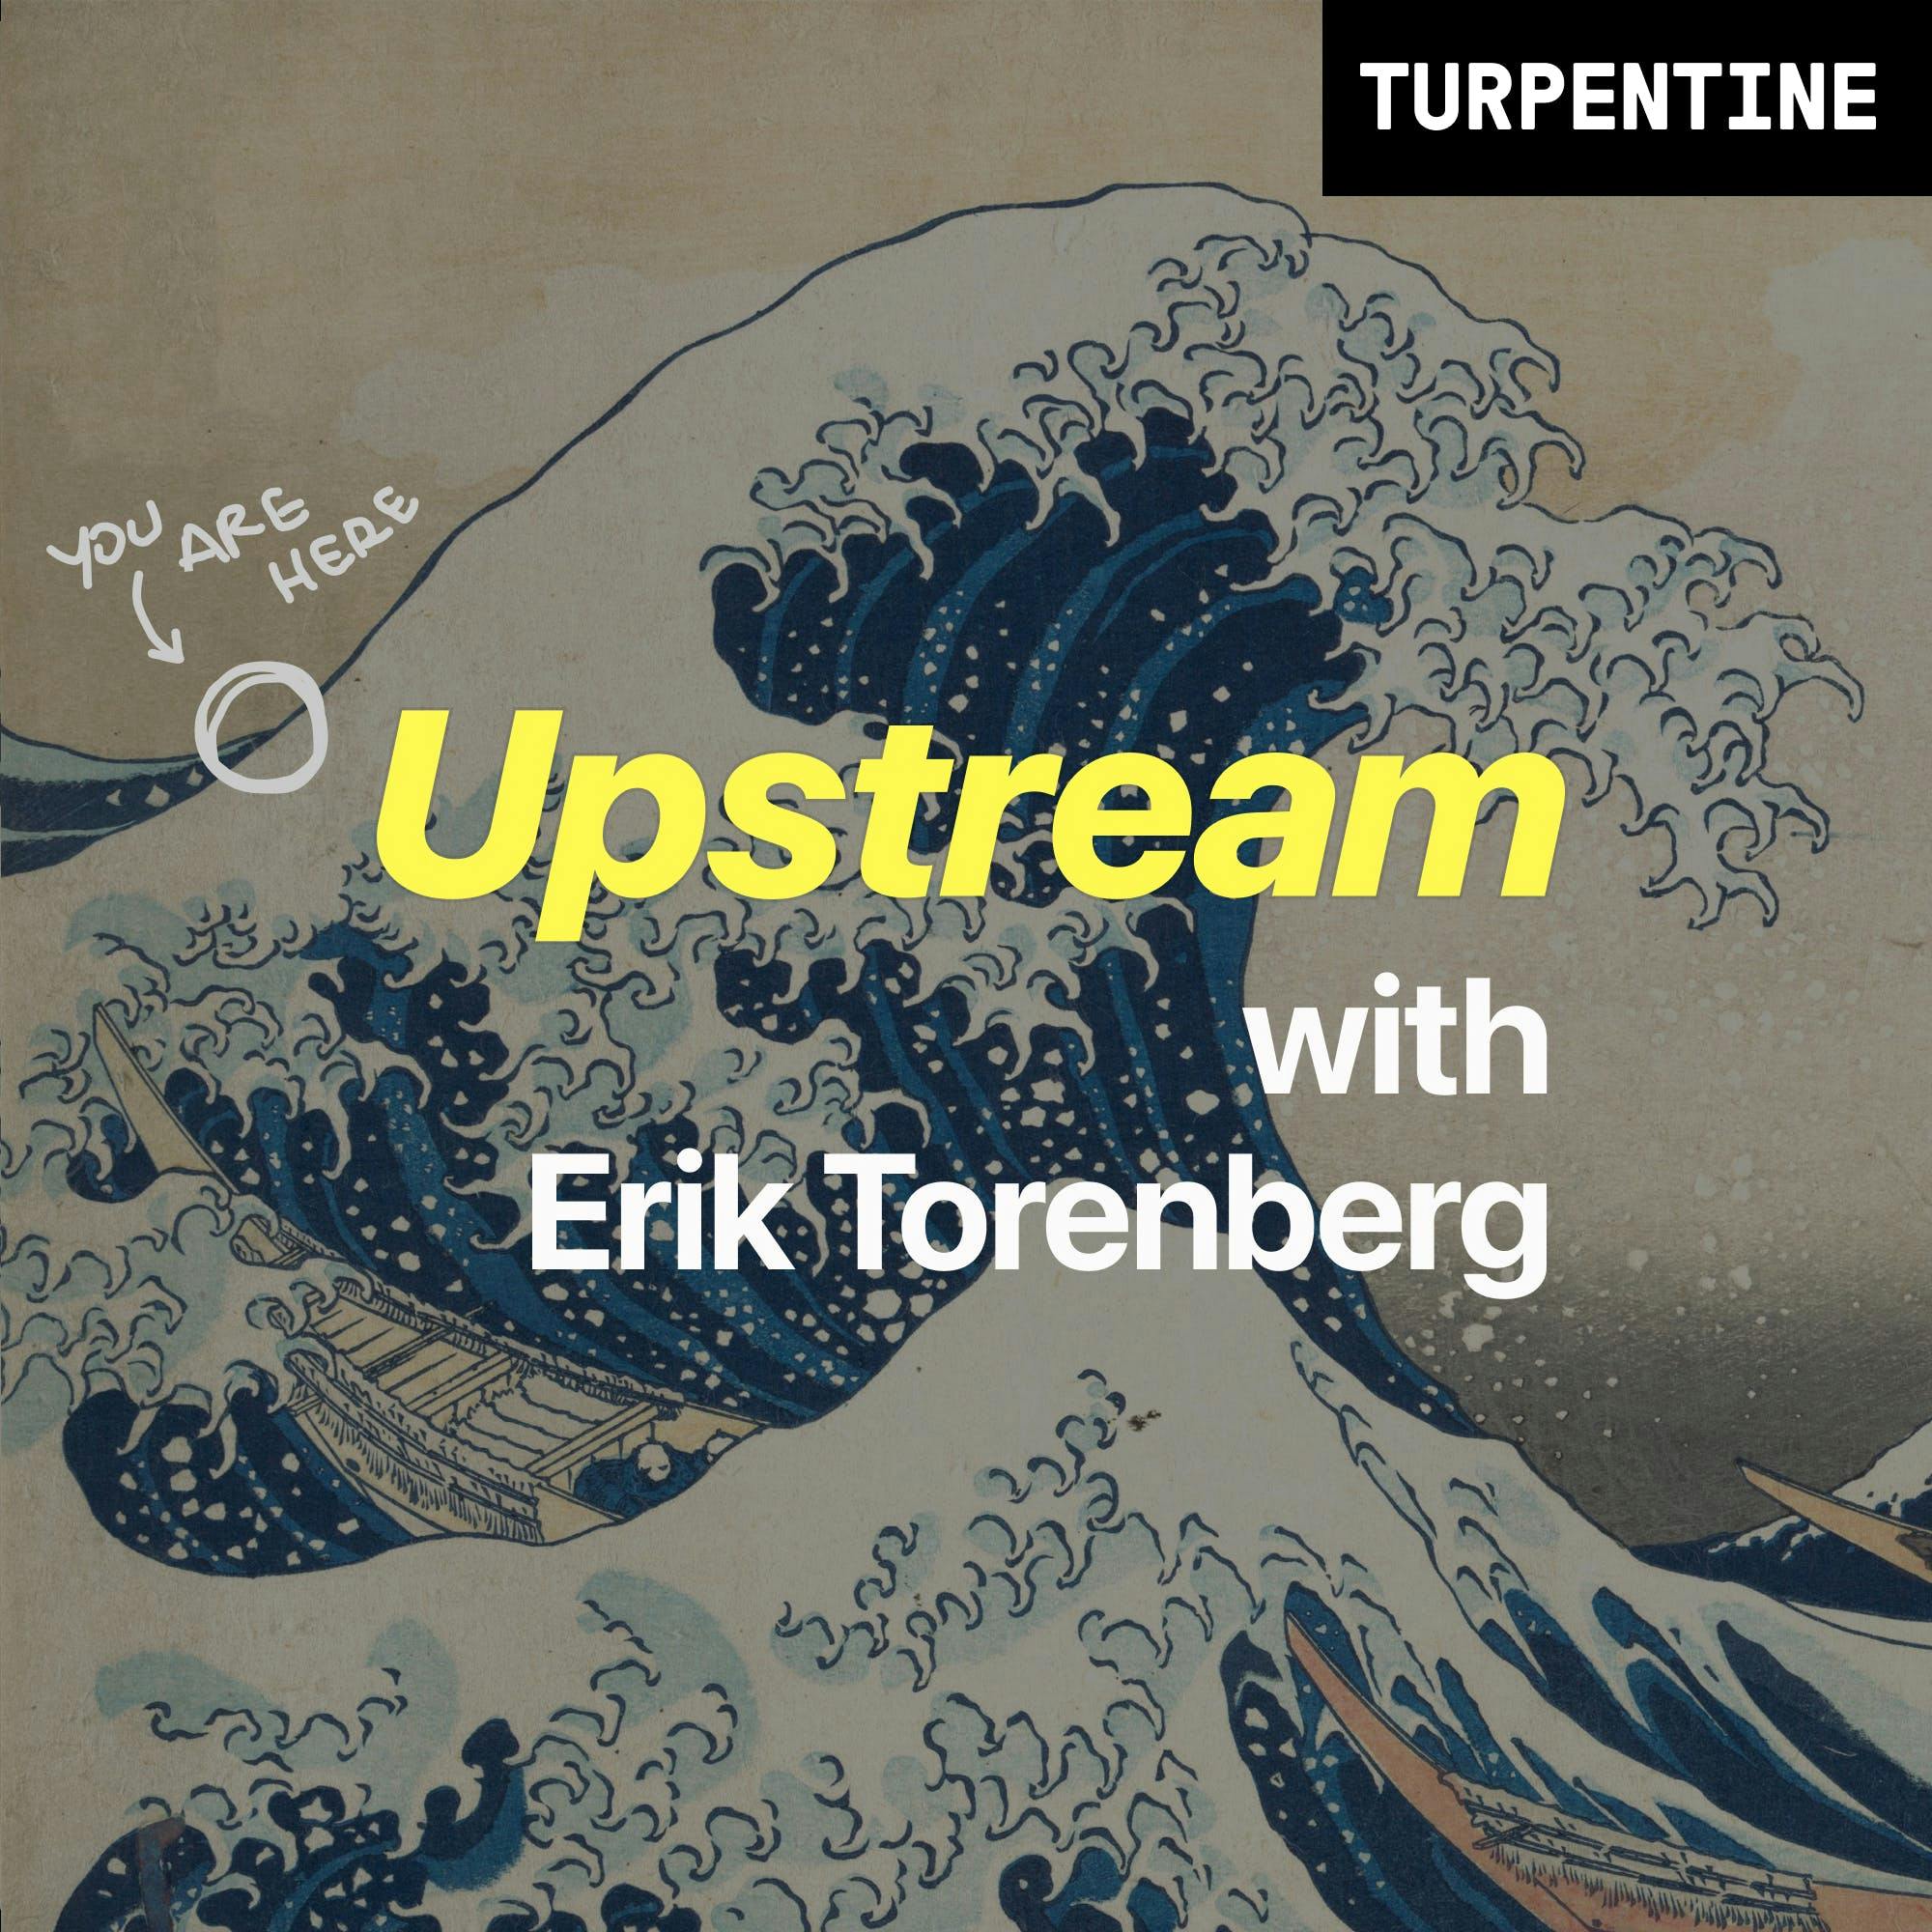 "Upstream" with Erik Torenberg